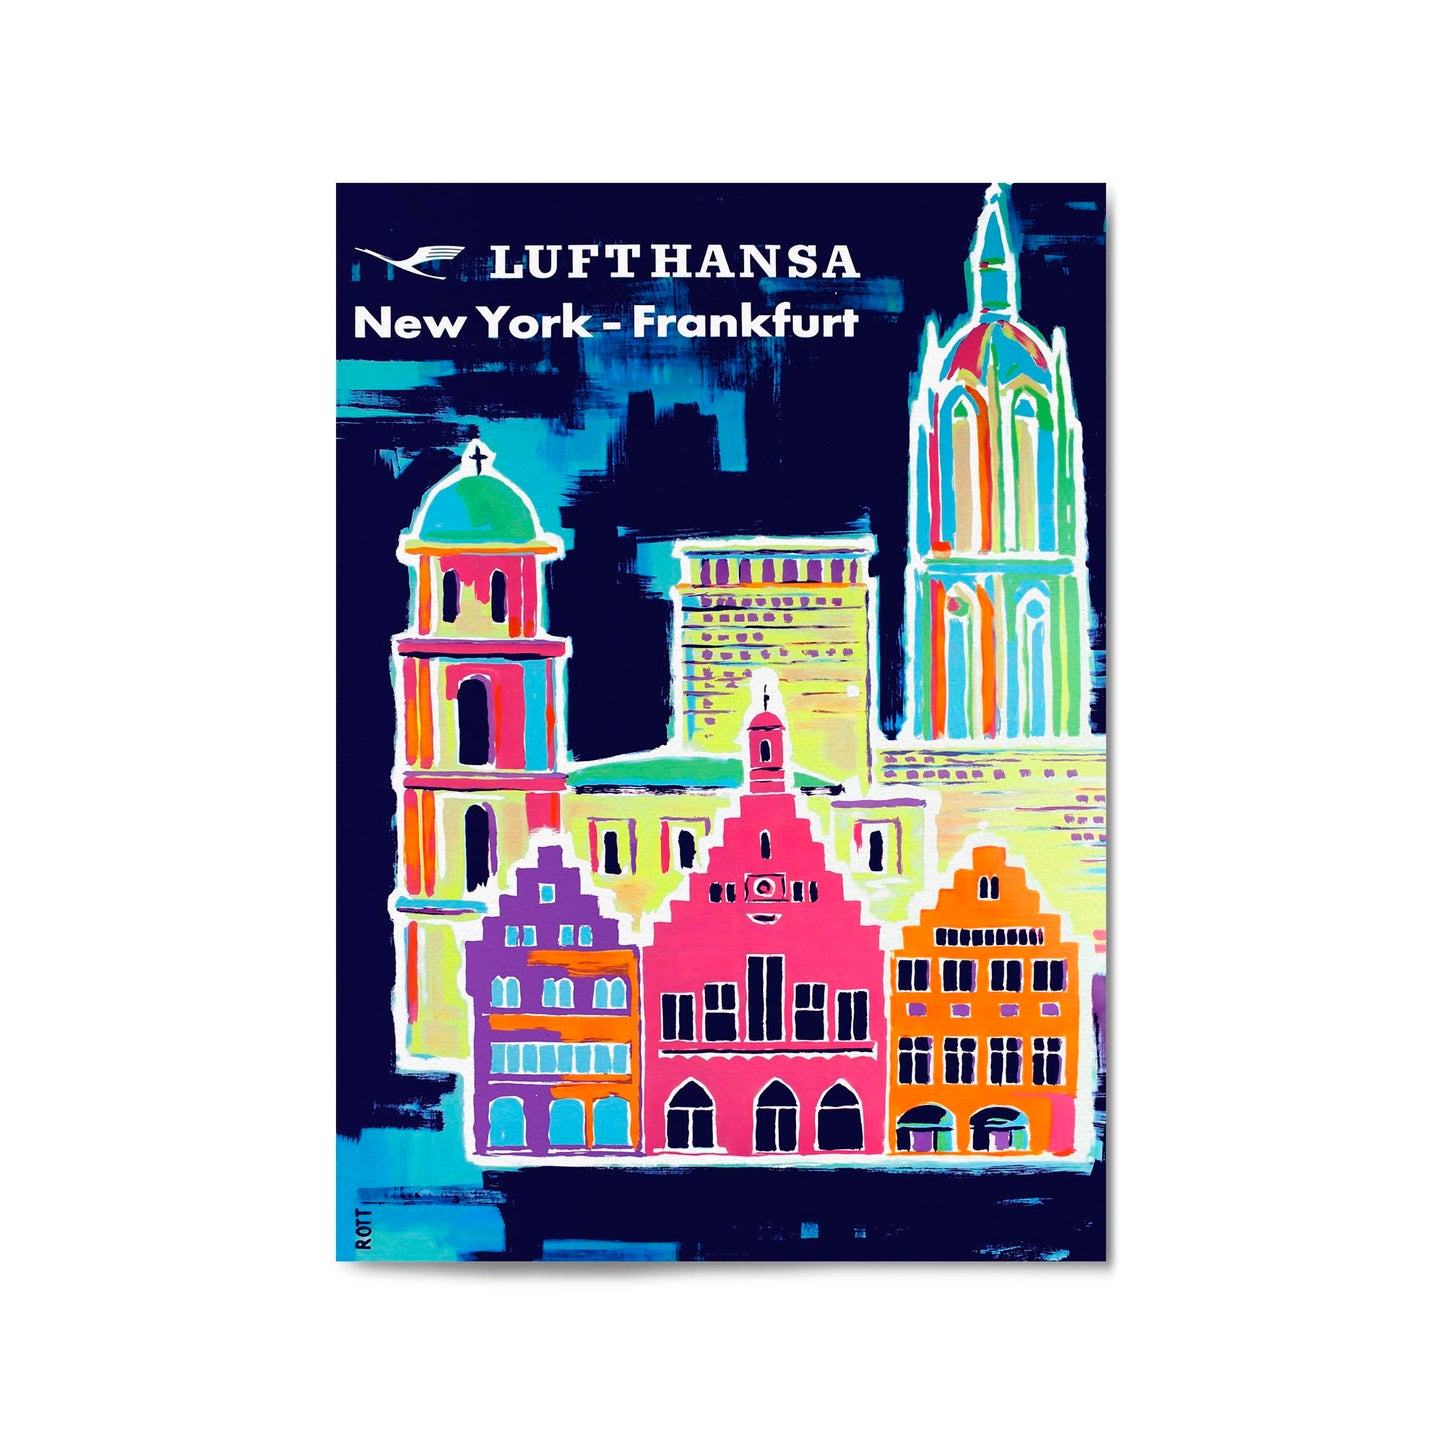 Frankfurt, Germany "Lufthansa" by Hans Rott | Framed Vintage Travel Poster